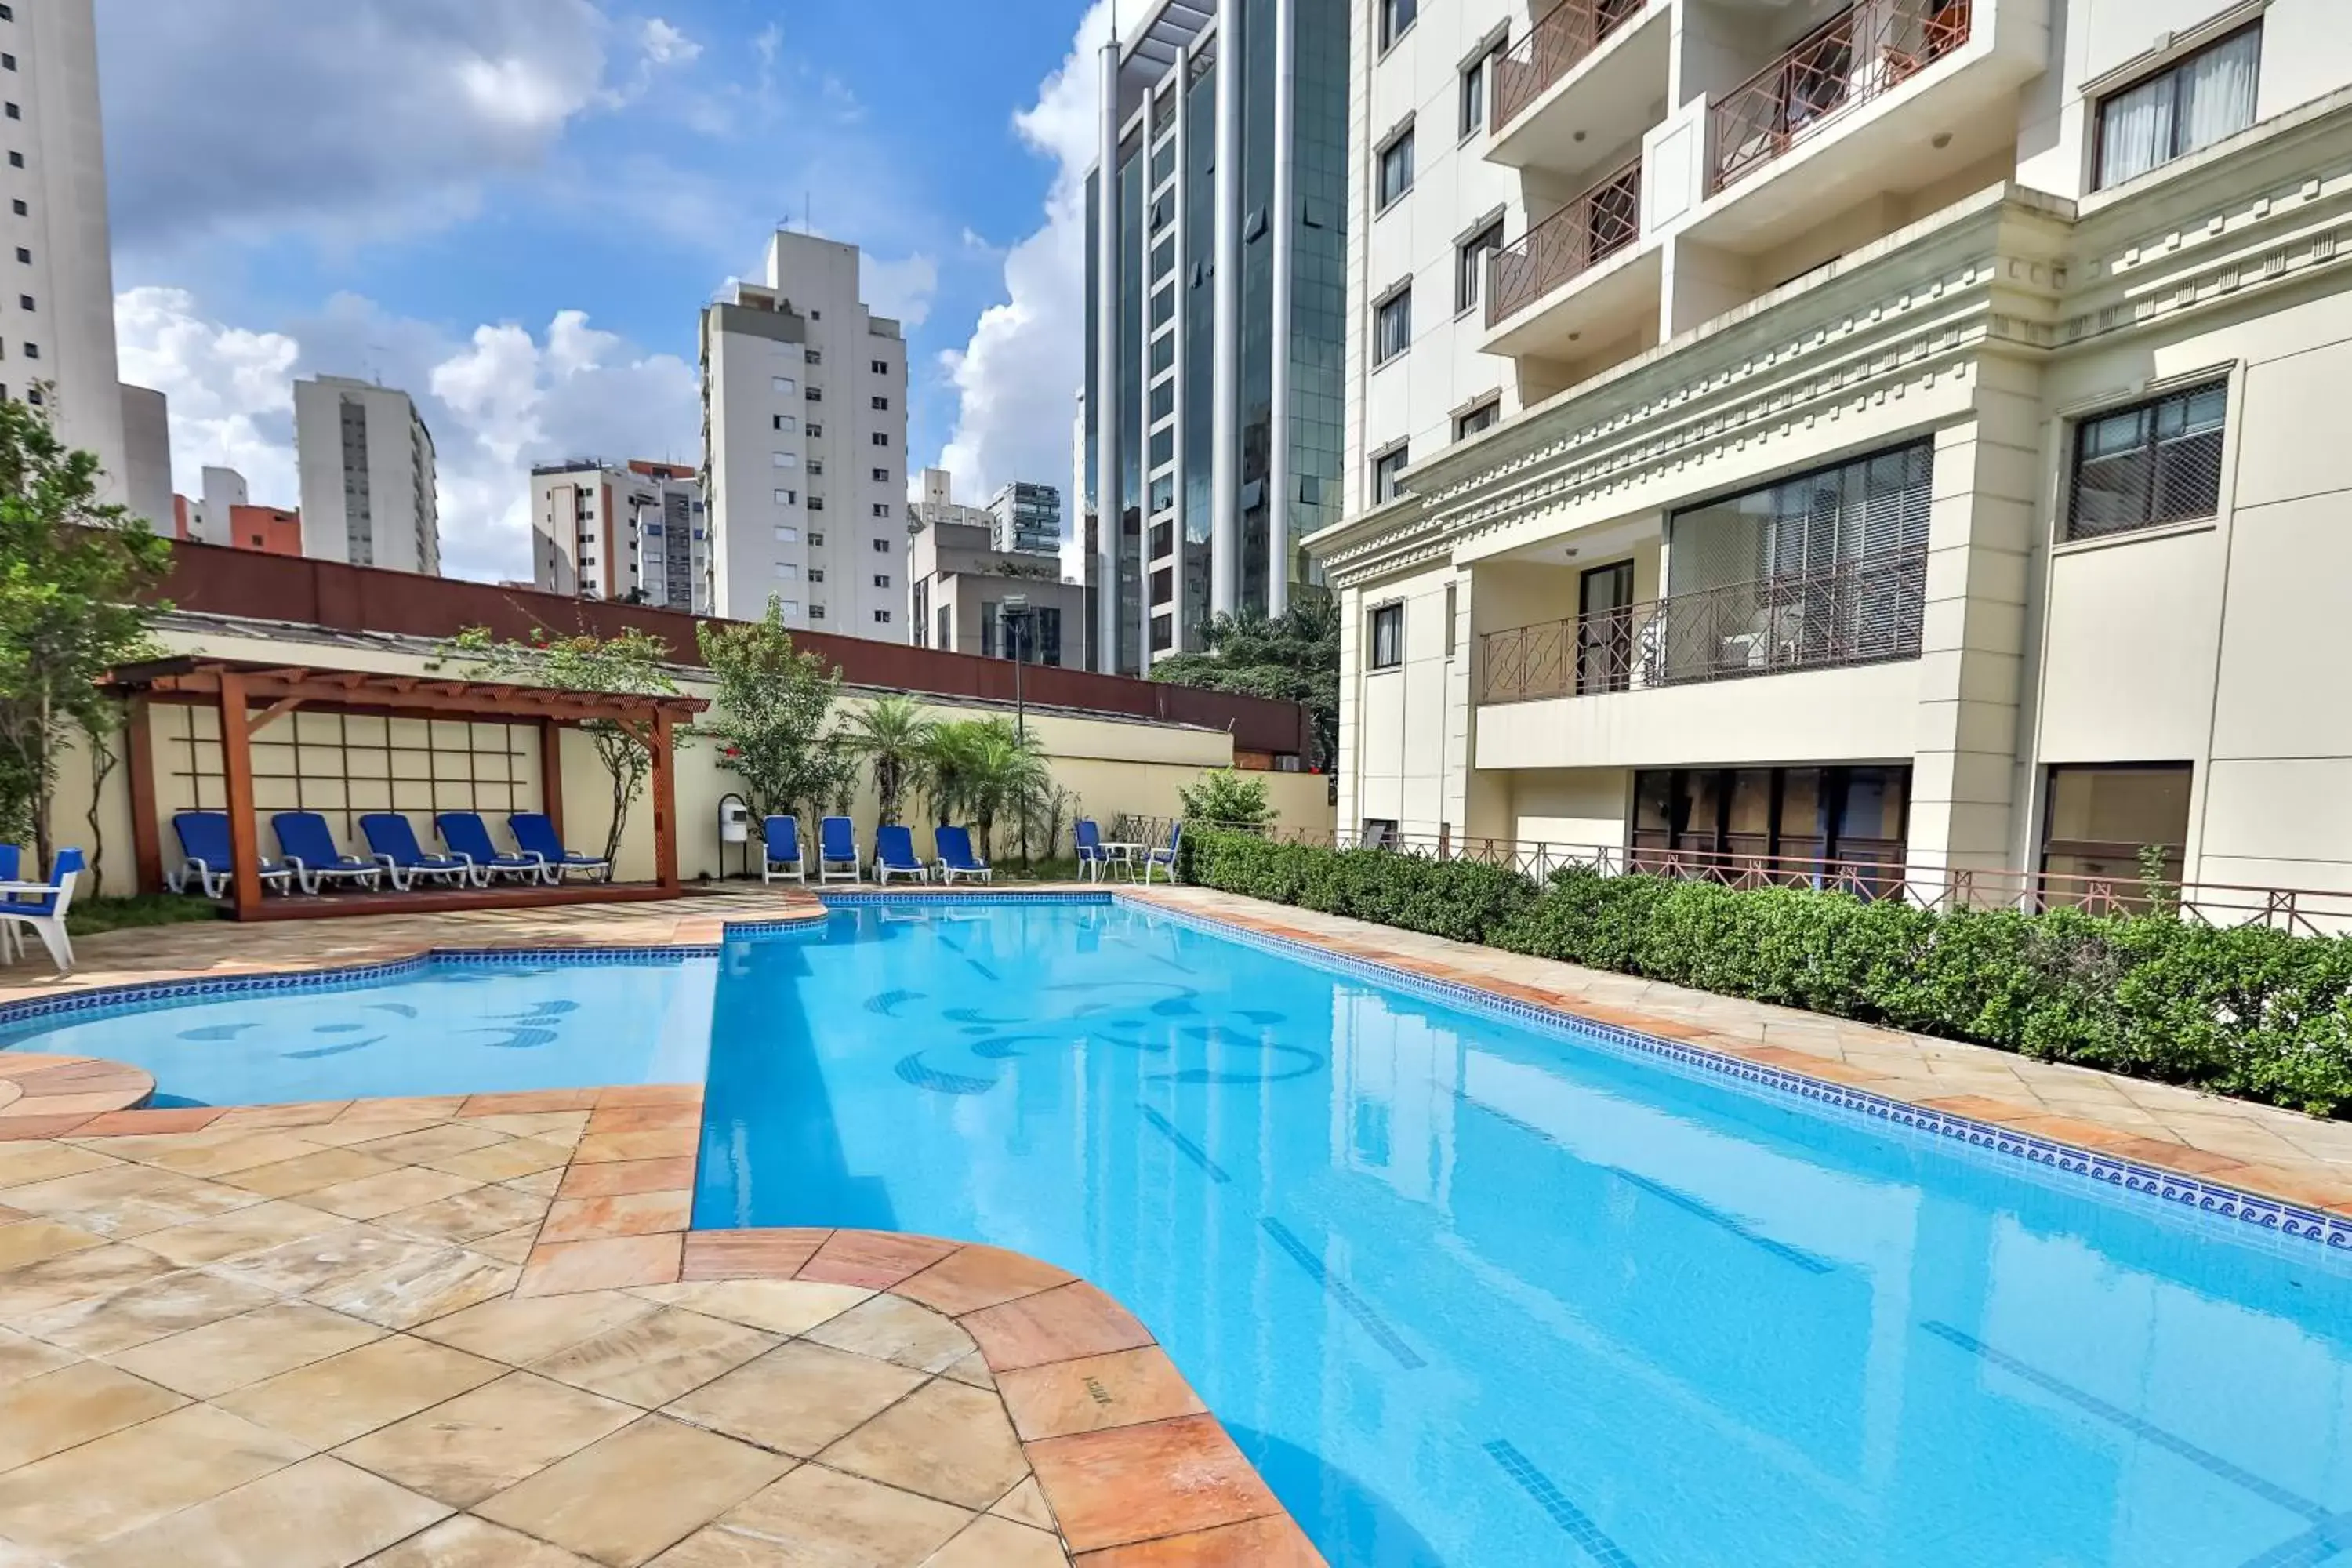 Swimming Pool in Quality Suites Vila Olimpia